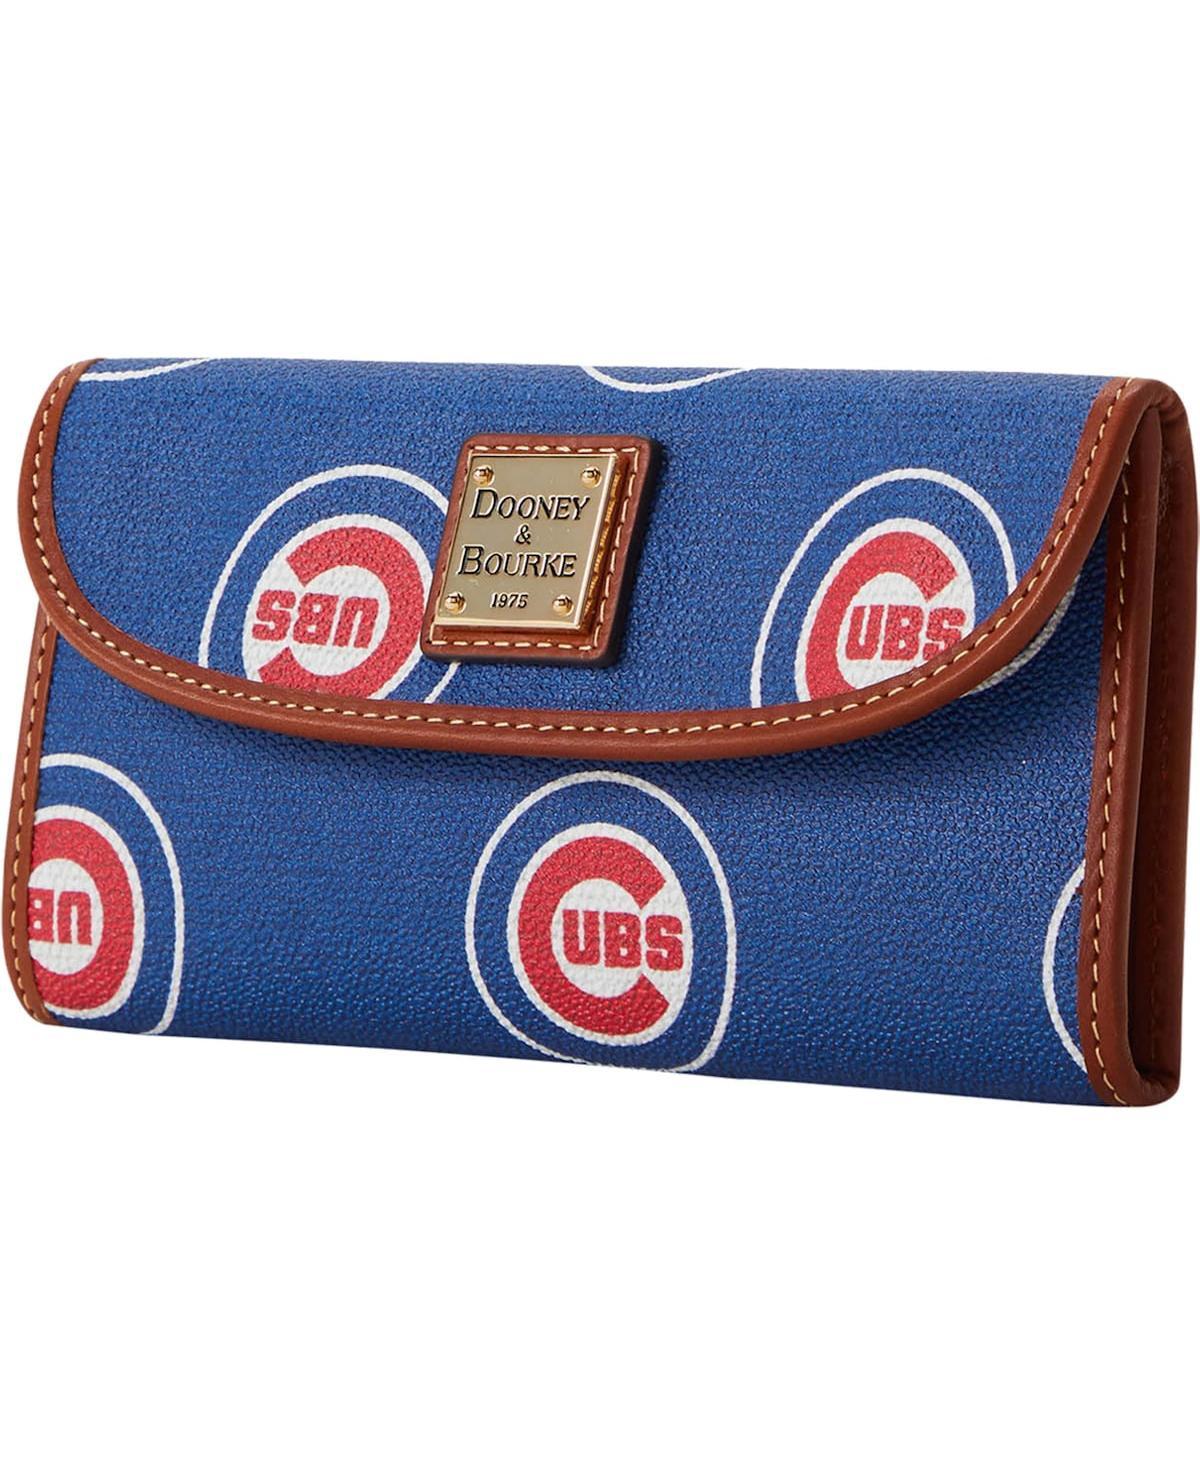 Dooney & Bourke Chicago Cubs Sporty Monogram Continental Clutch in Blue